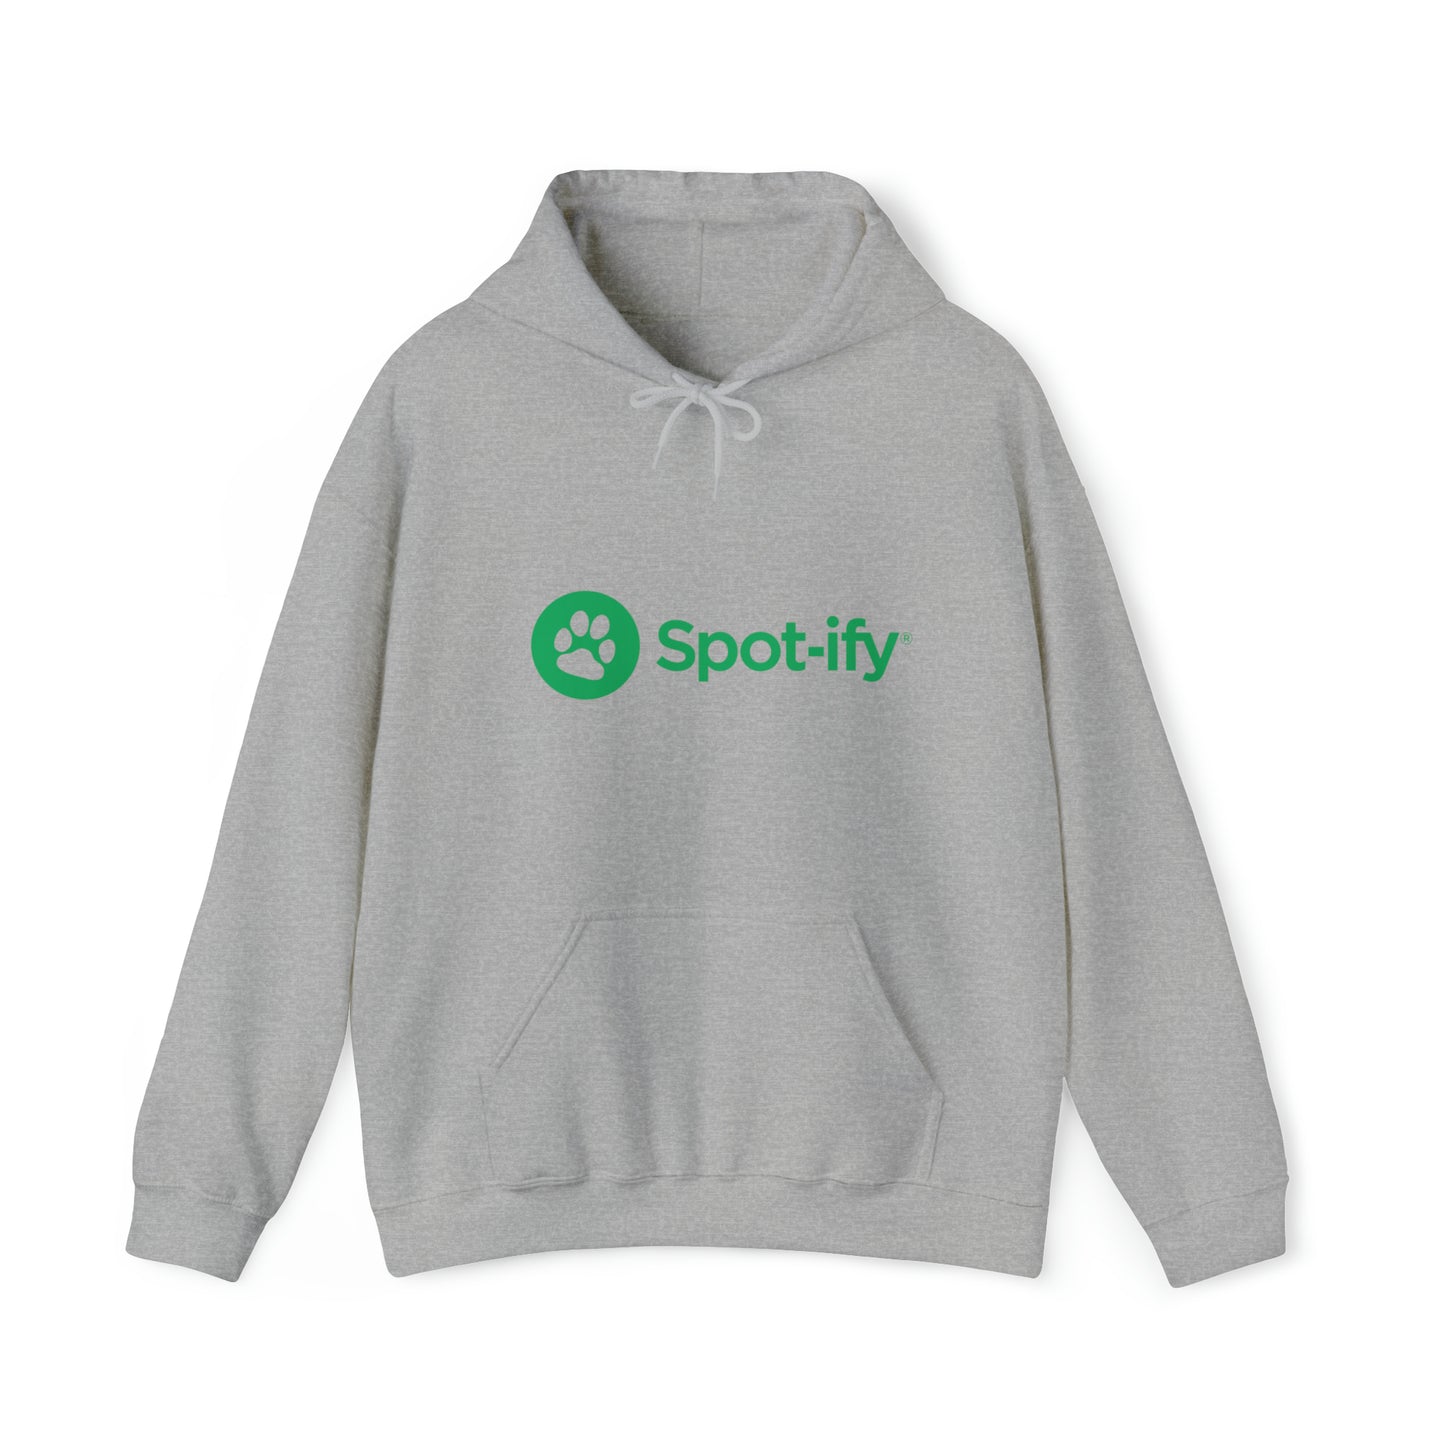 Custom Parody Hooded Sweatshirt, Spot-ify design